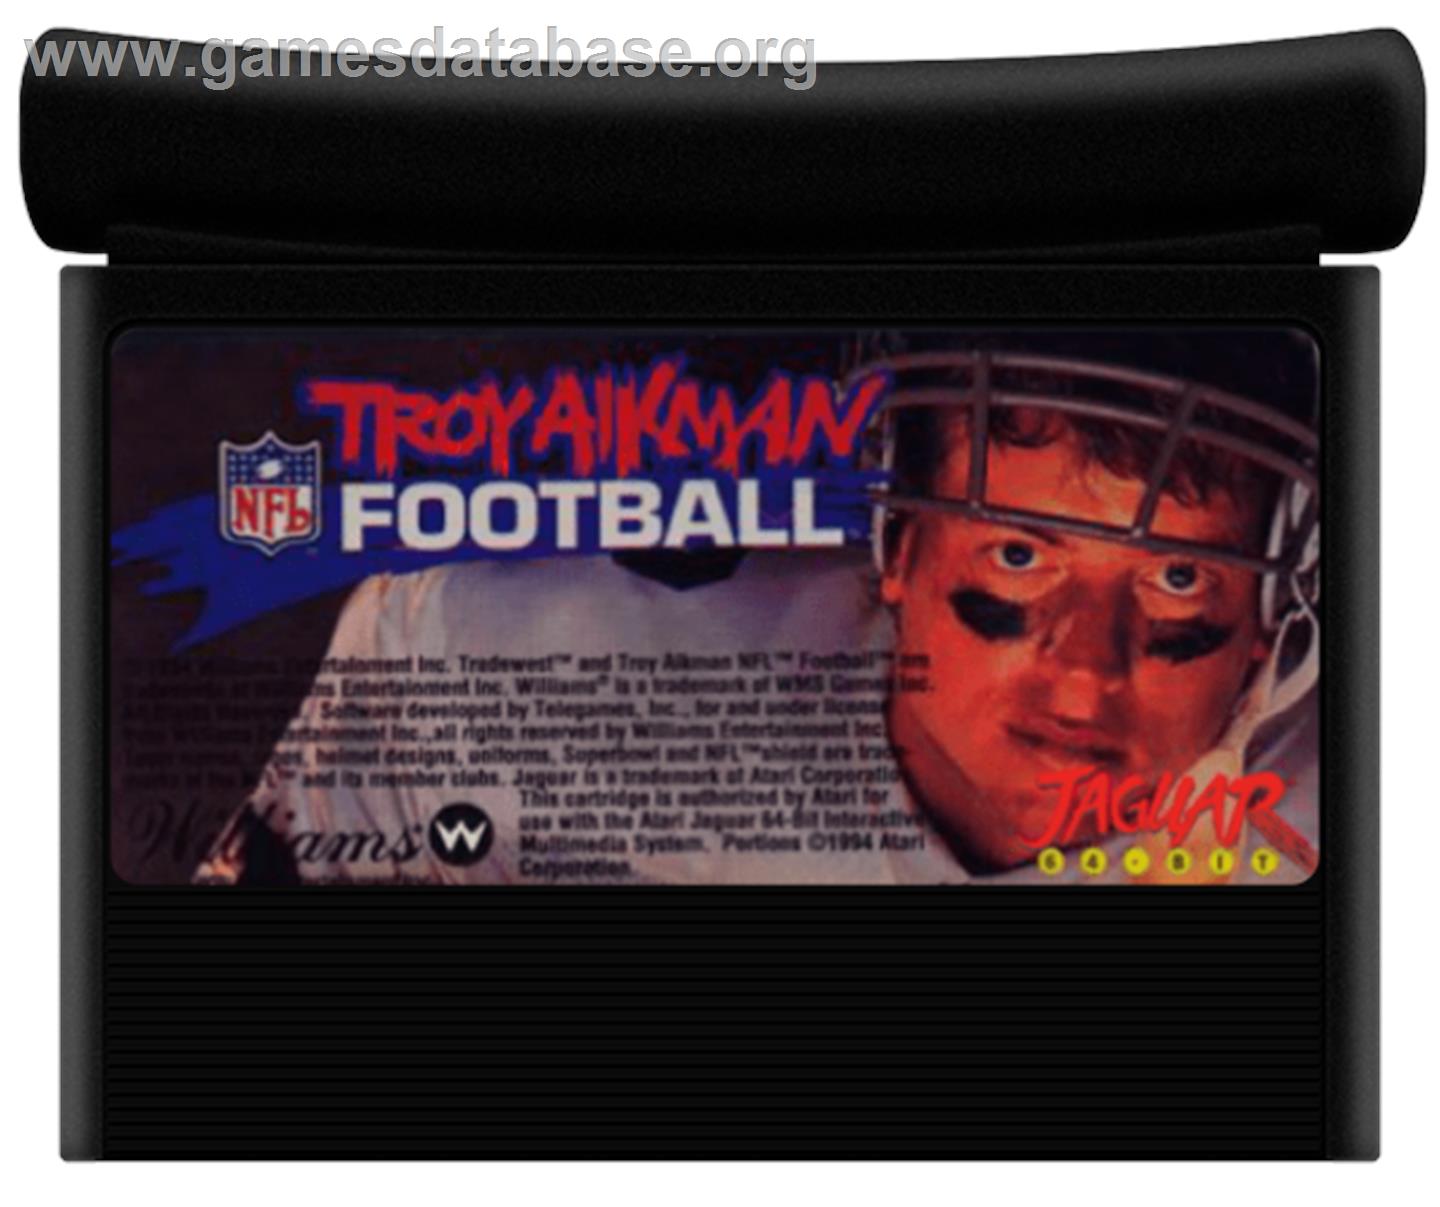 Troy Aikman NFL Football - Atari Jaguar - Artwork - Cartridge